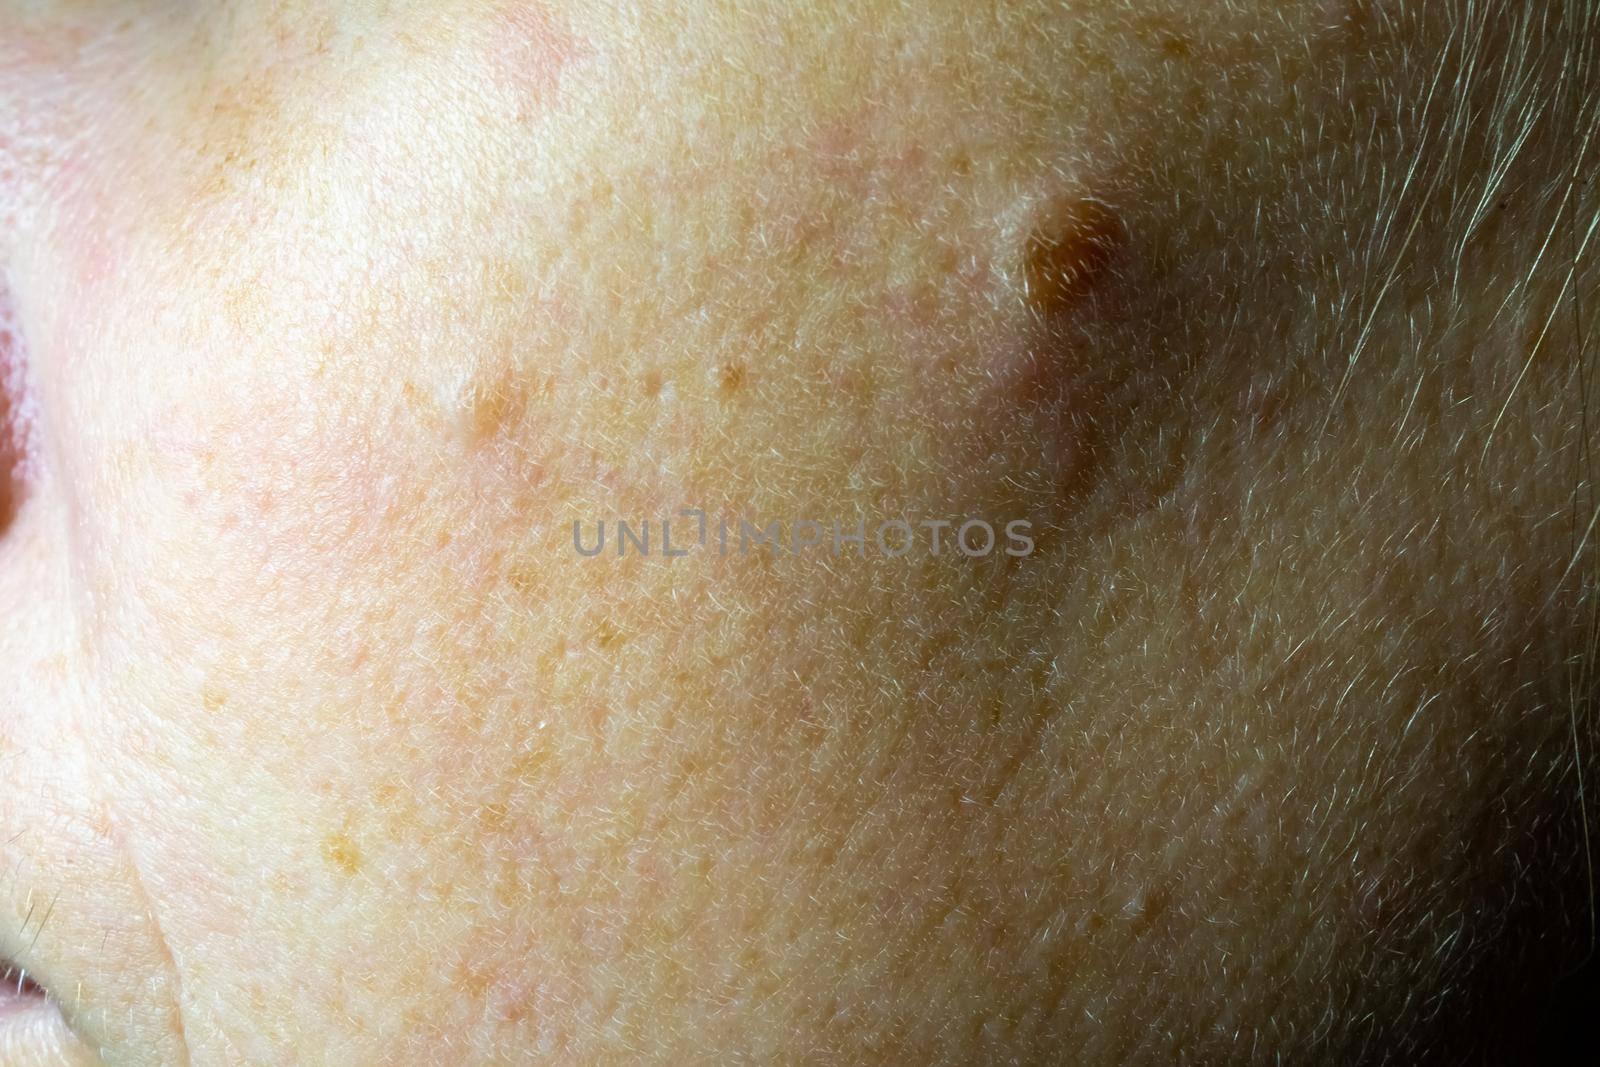 Close-up of a woman's cheek with problem skin by Serhii_Voroshchuk